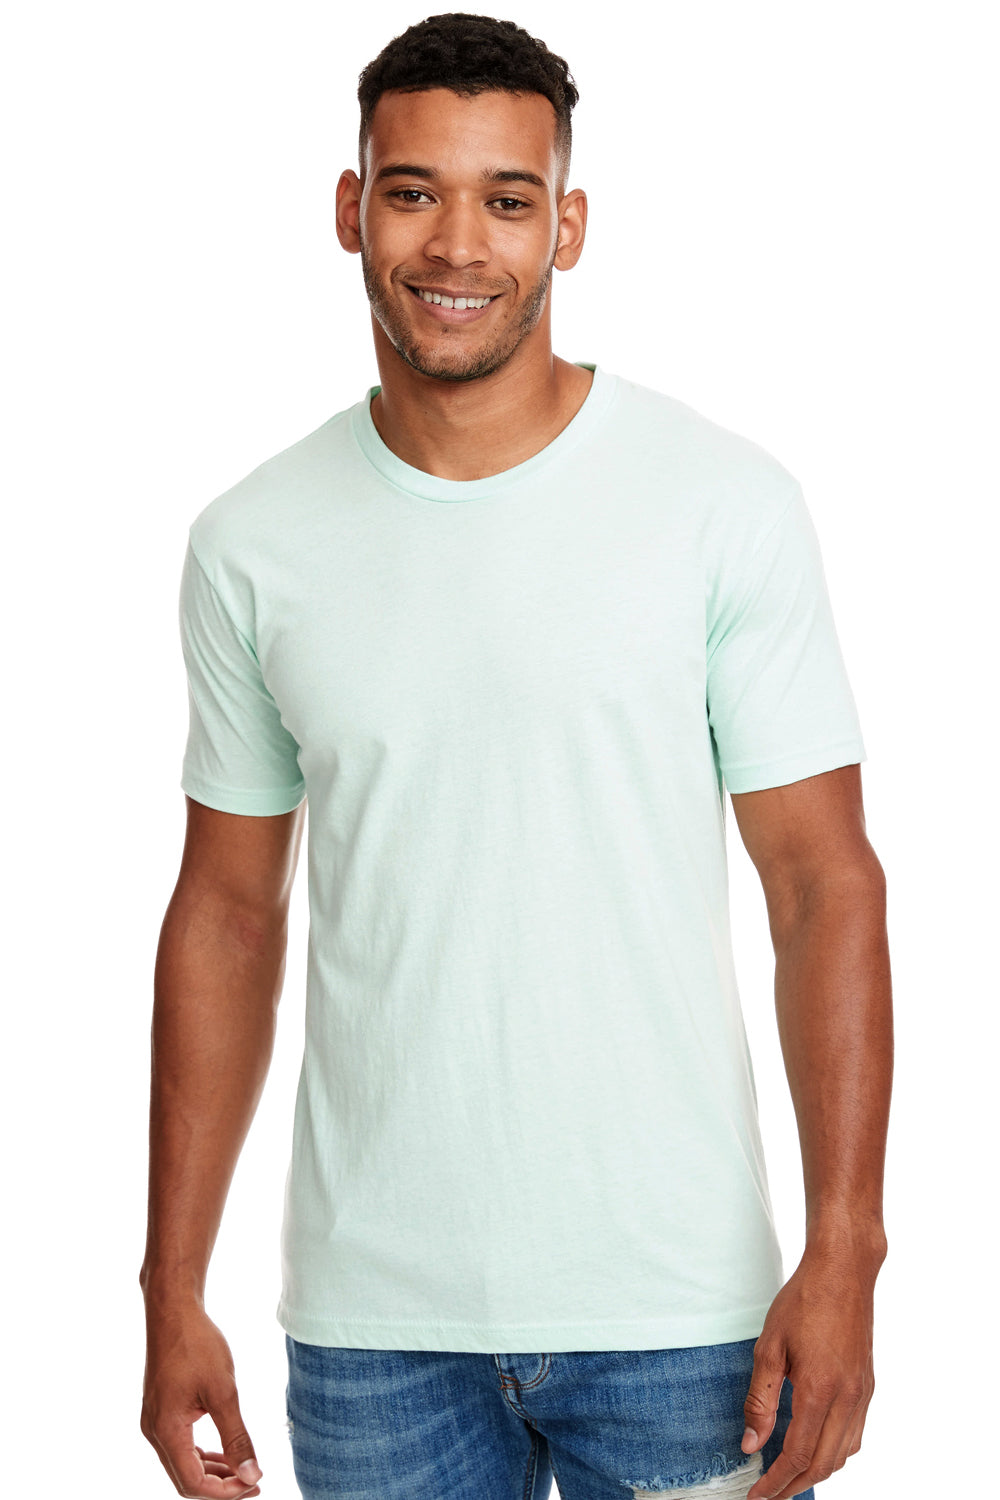 Next Level N6210 Mens CVC Jersey Short Sleeve Crewneck T-Shirt Mint Green Front